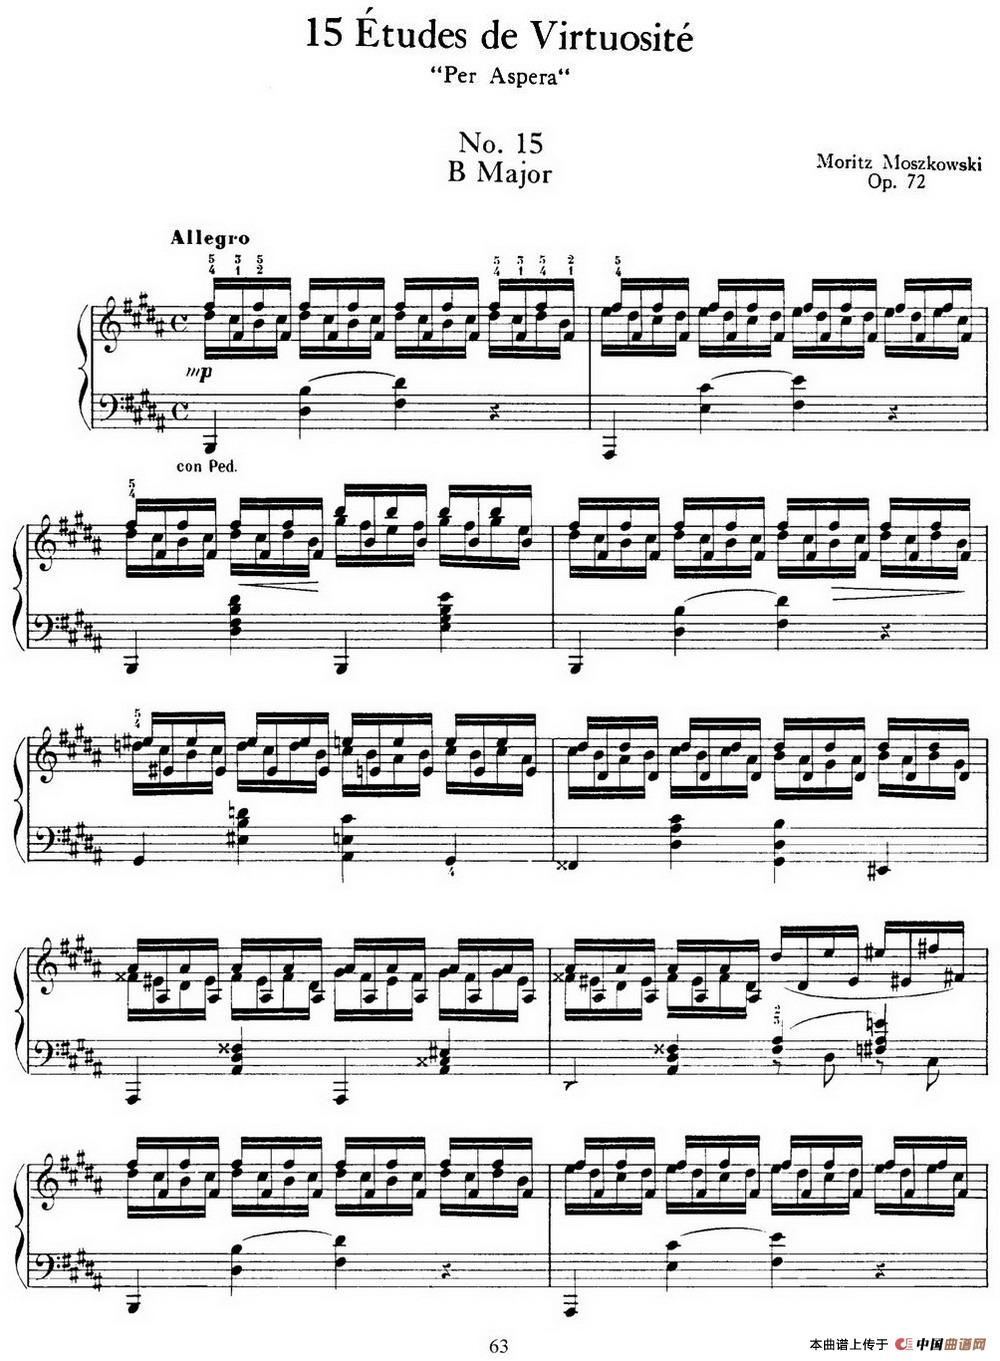 15 Etudes de Virtuosité Op.72 No.15（十五首钢琴练习曲之十五）(1)_063-.jpg